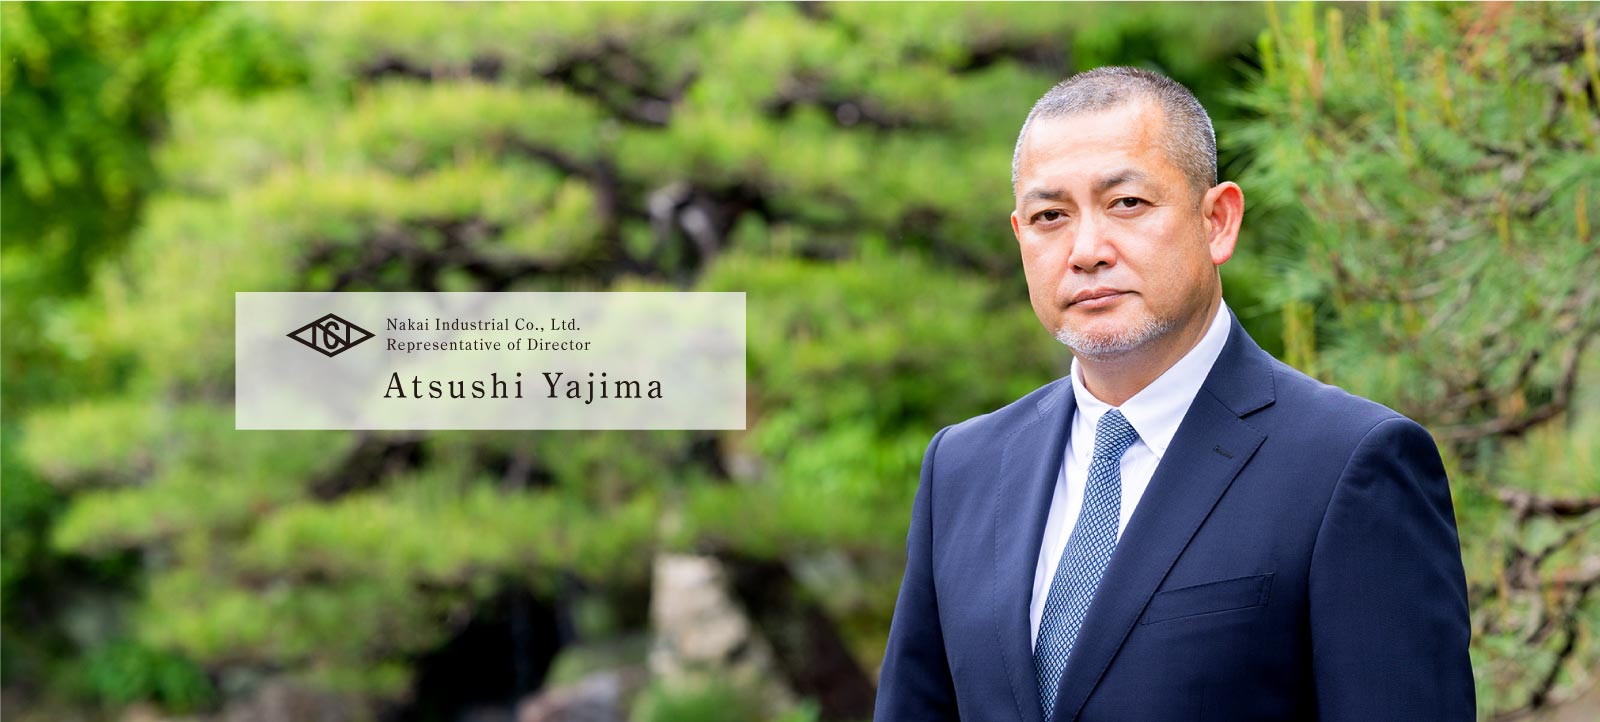 Nakai Industrial Co., Ltd.
Representative of Director
Atsushi Yajima